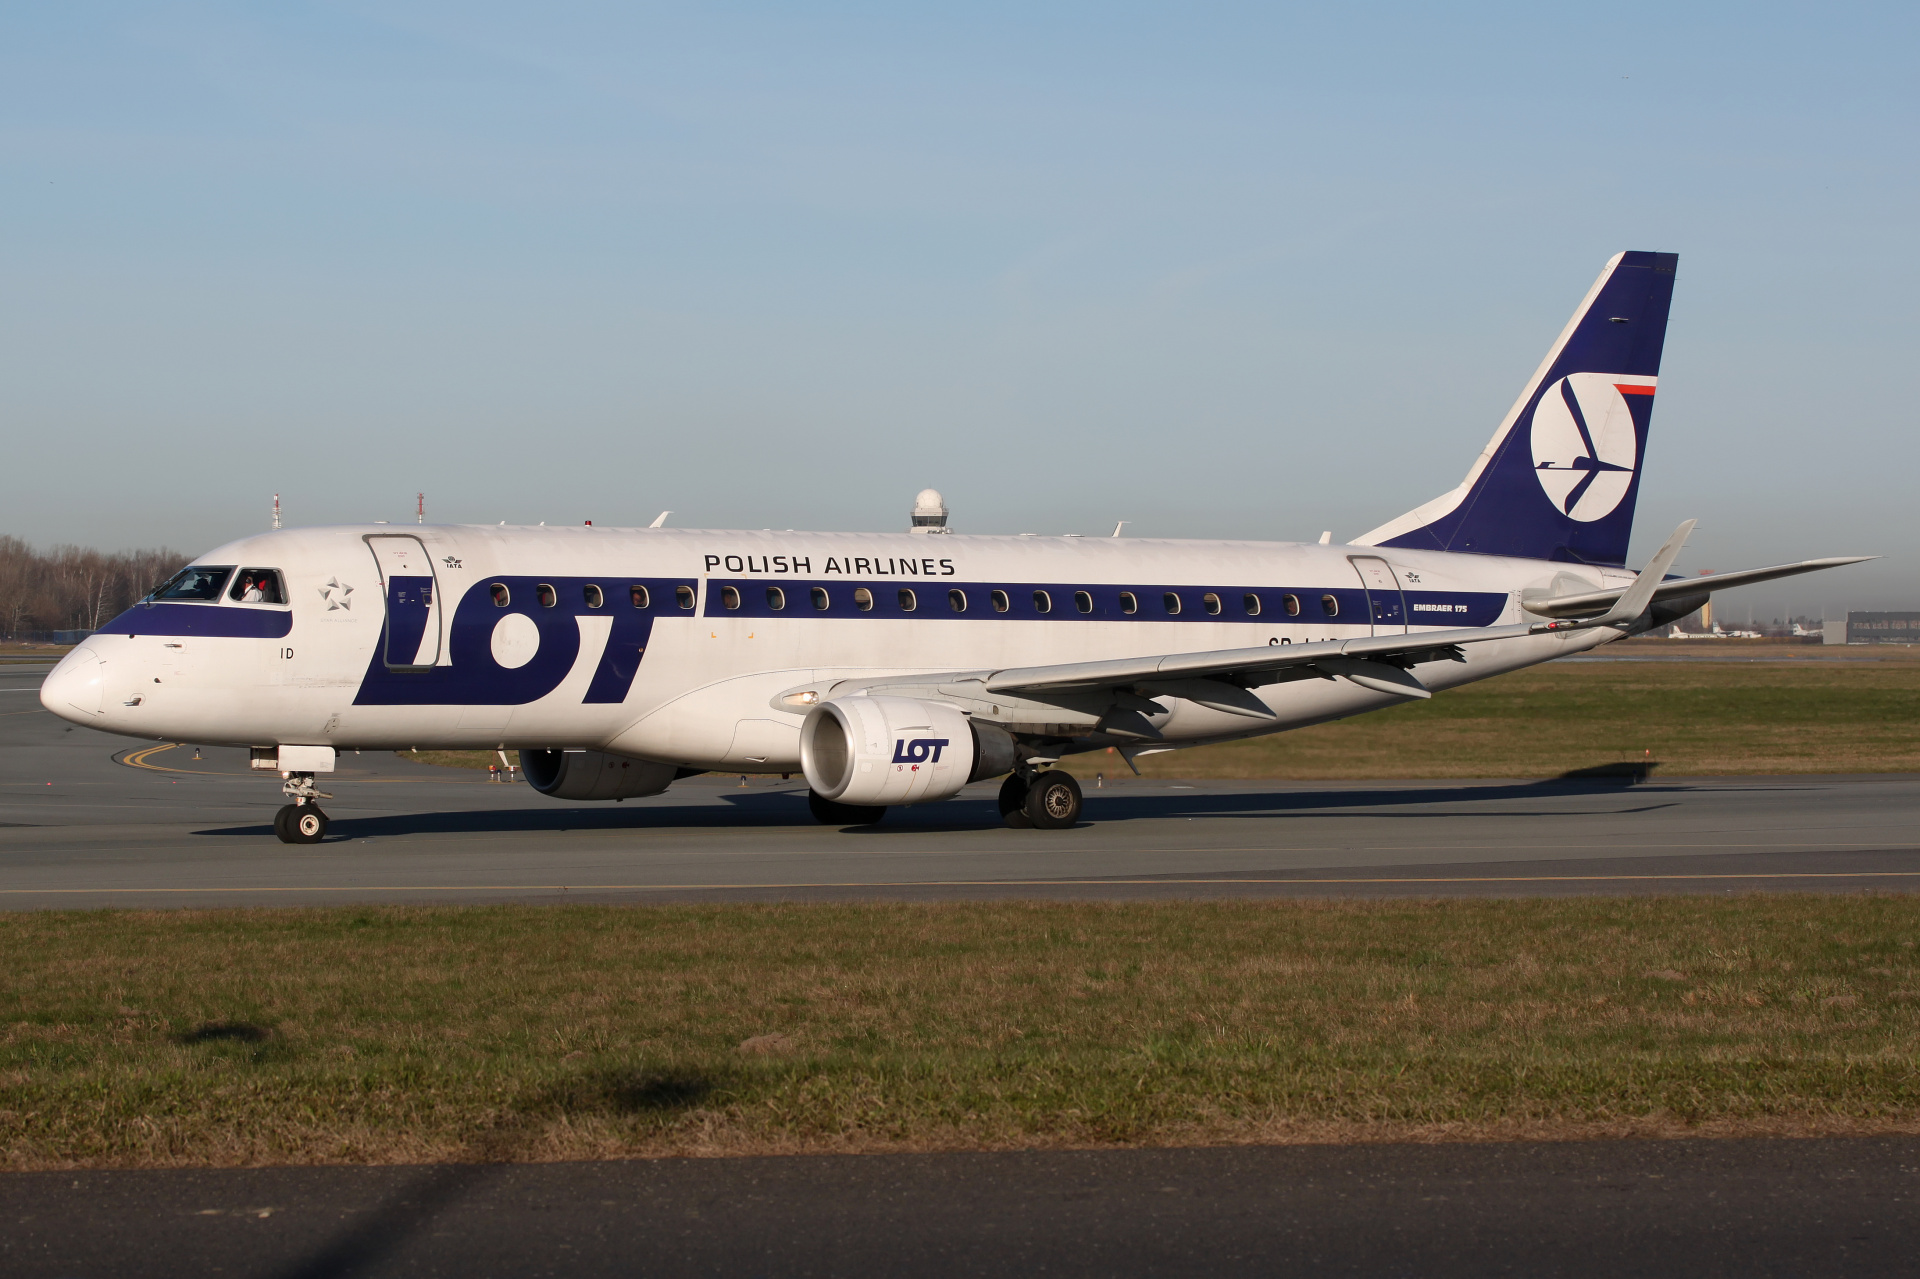 SP-LID (Samoloty » Spotting na EPWA » Embraer E175 » Polskie Linie Lotnicze LOT)